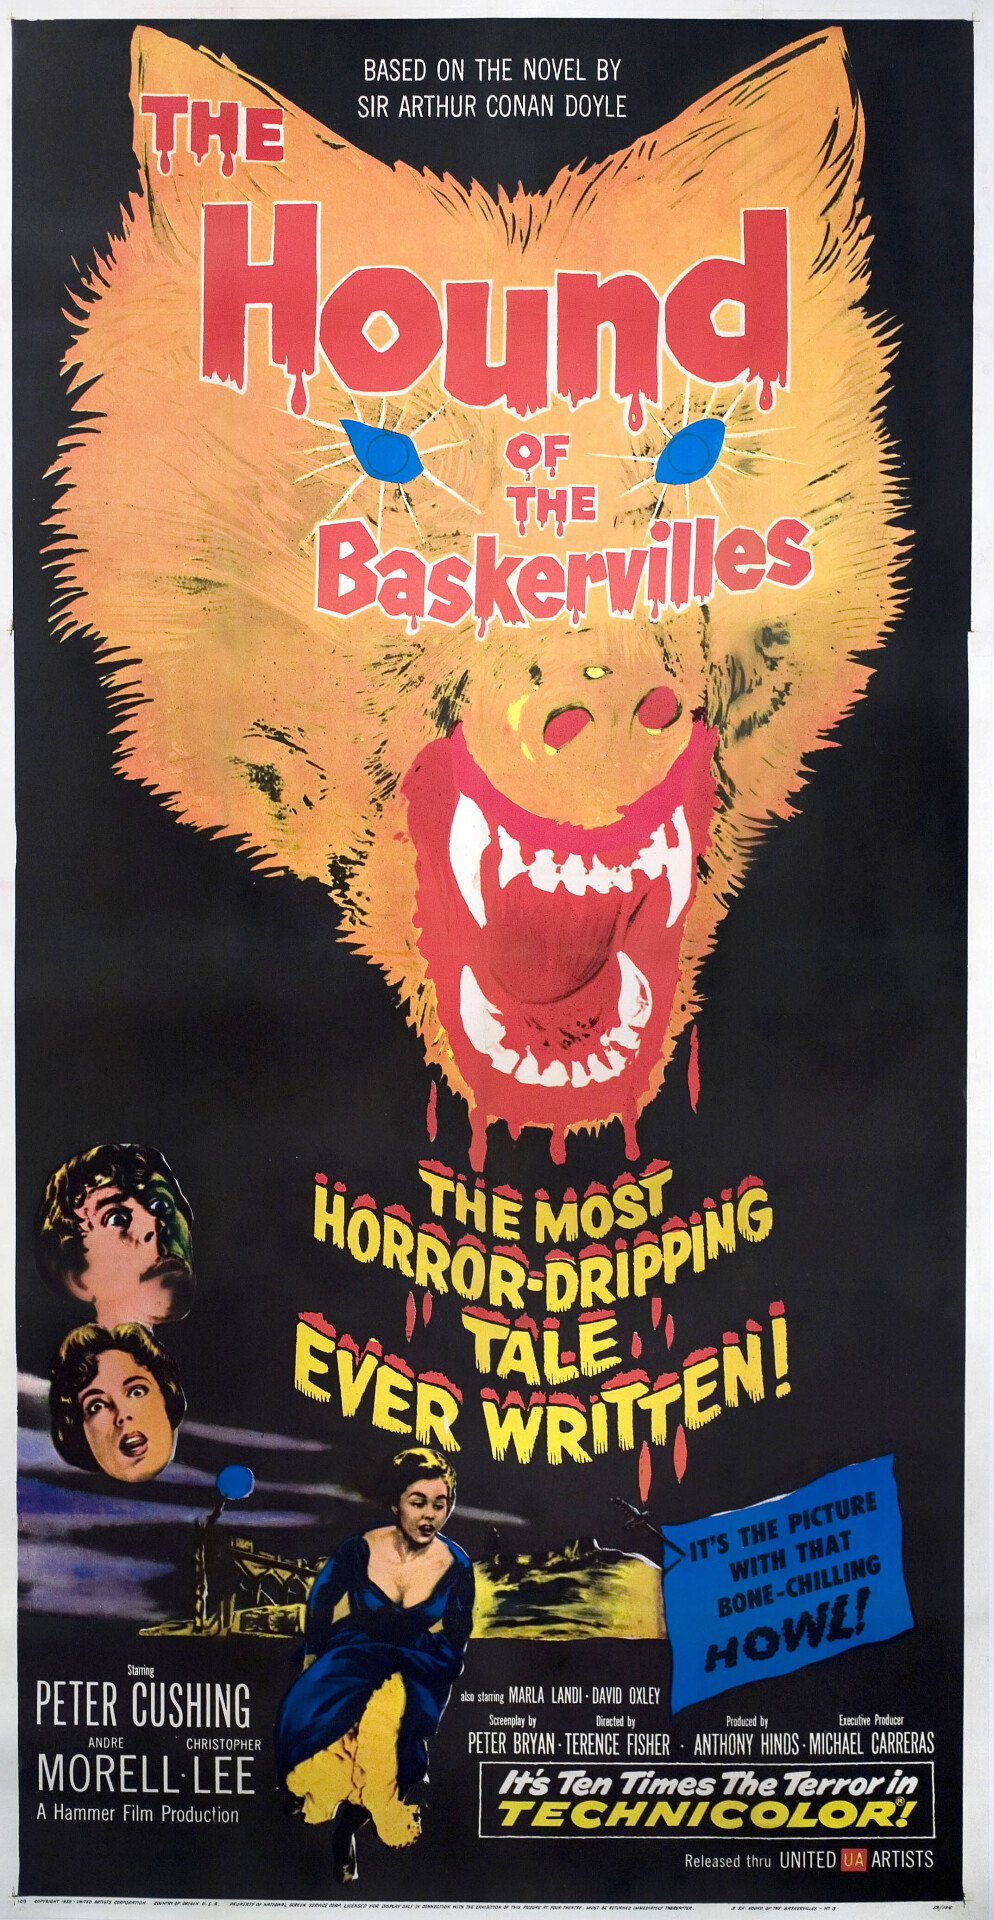 Собака Баскервилей (The Hound of the Baskervilles, 1959), режиссёр Теренс Фишер, американский постер к фильму (Hummer horror, 1959 год) (1)